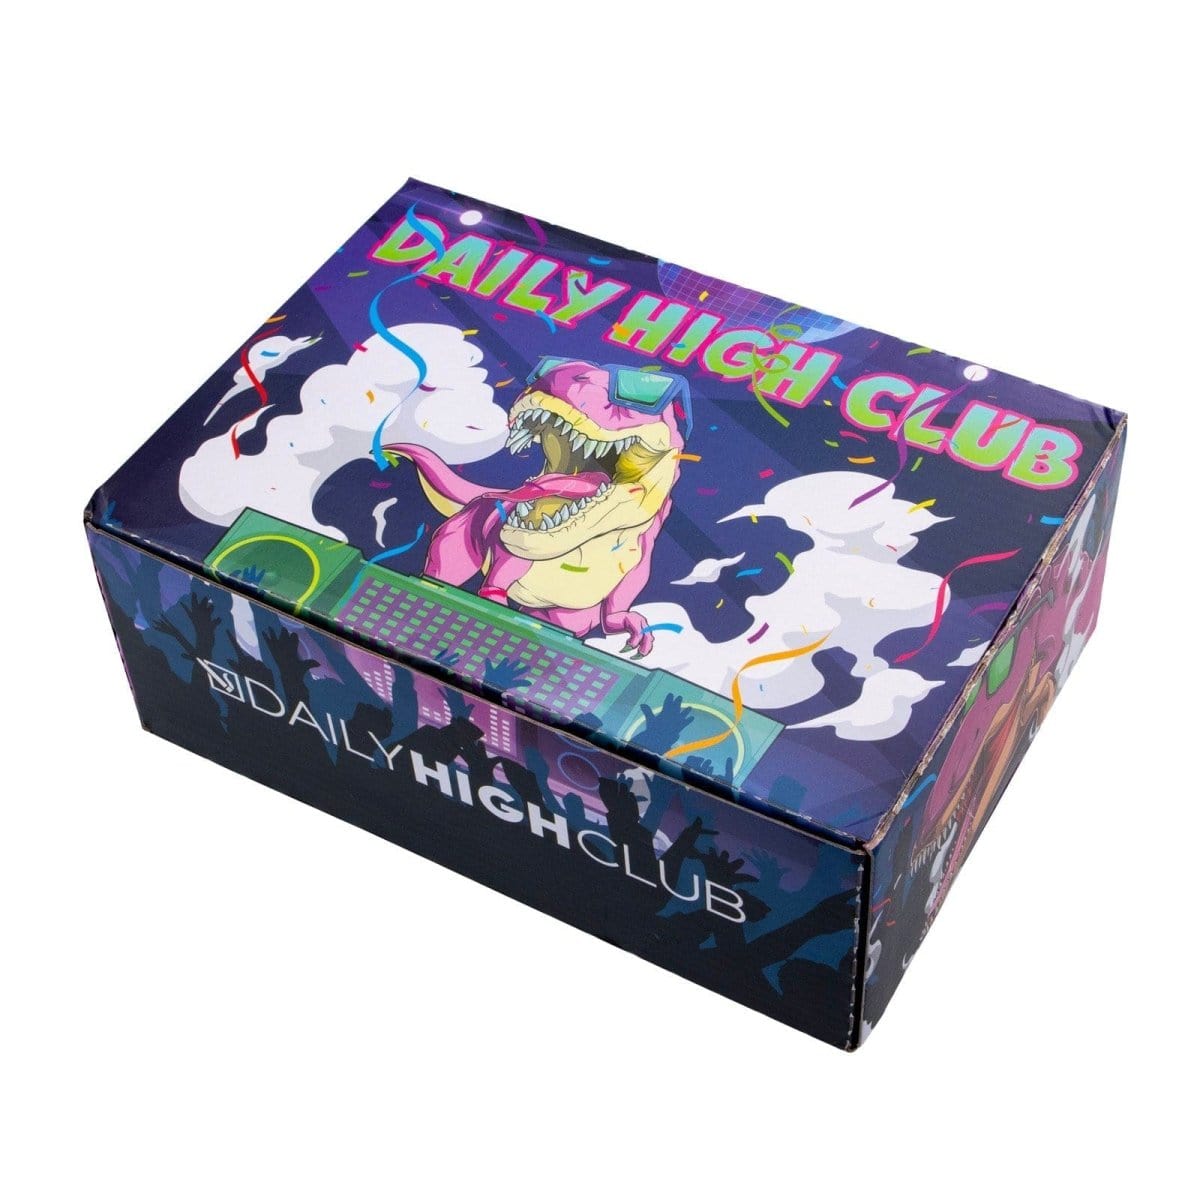 Daily High Club subscription box "Rave Dino" Box